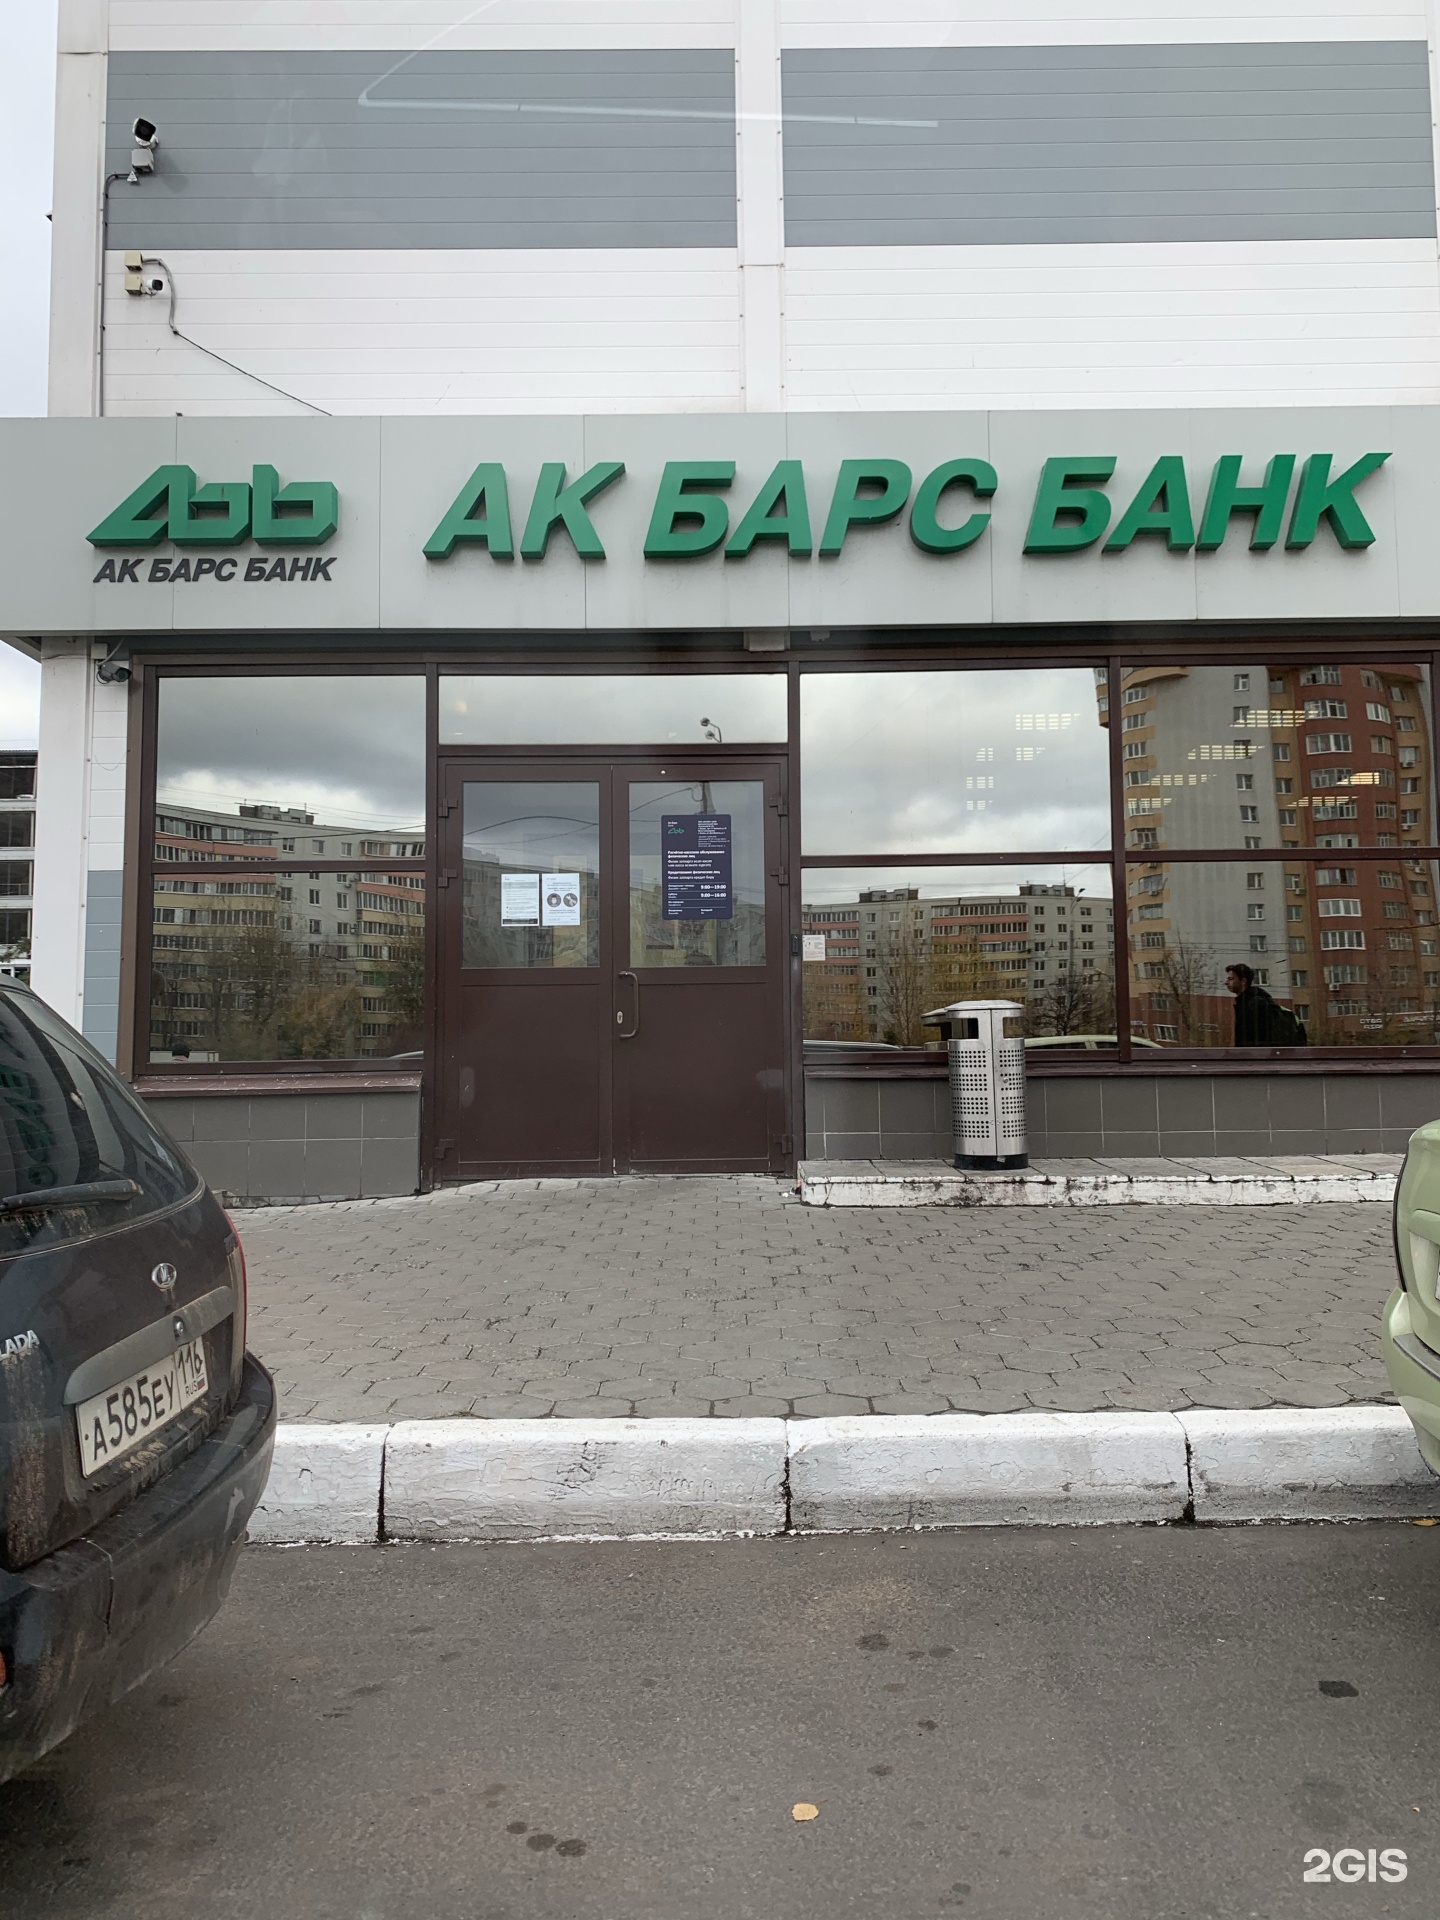 Курс орион банка. Ямашева 76 АК Барс. АК Барс банк. АК Барс банк на Ямашева. Банк АК Барс в Новосибирске.